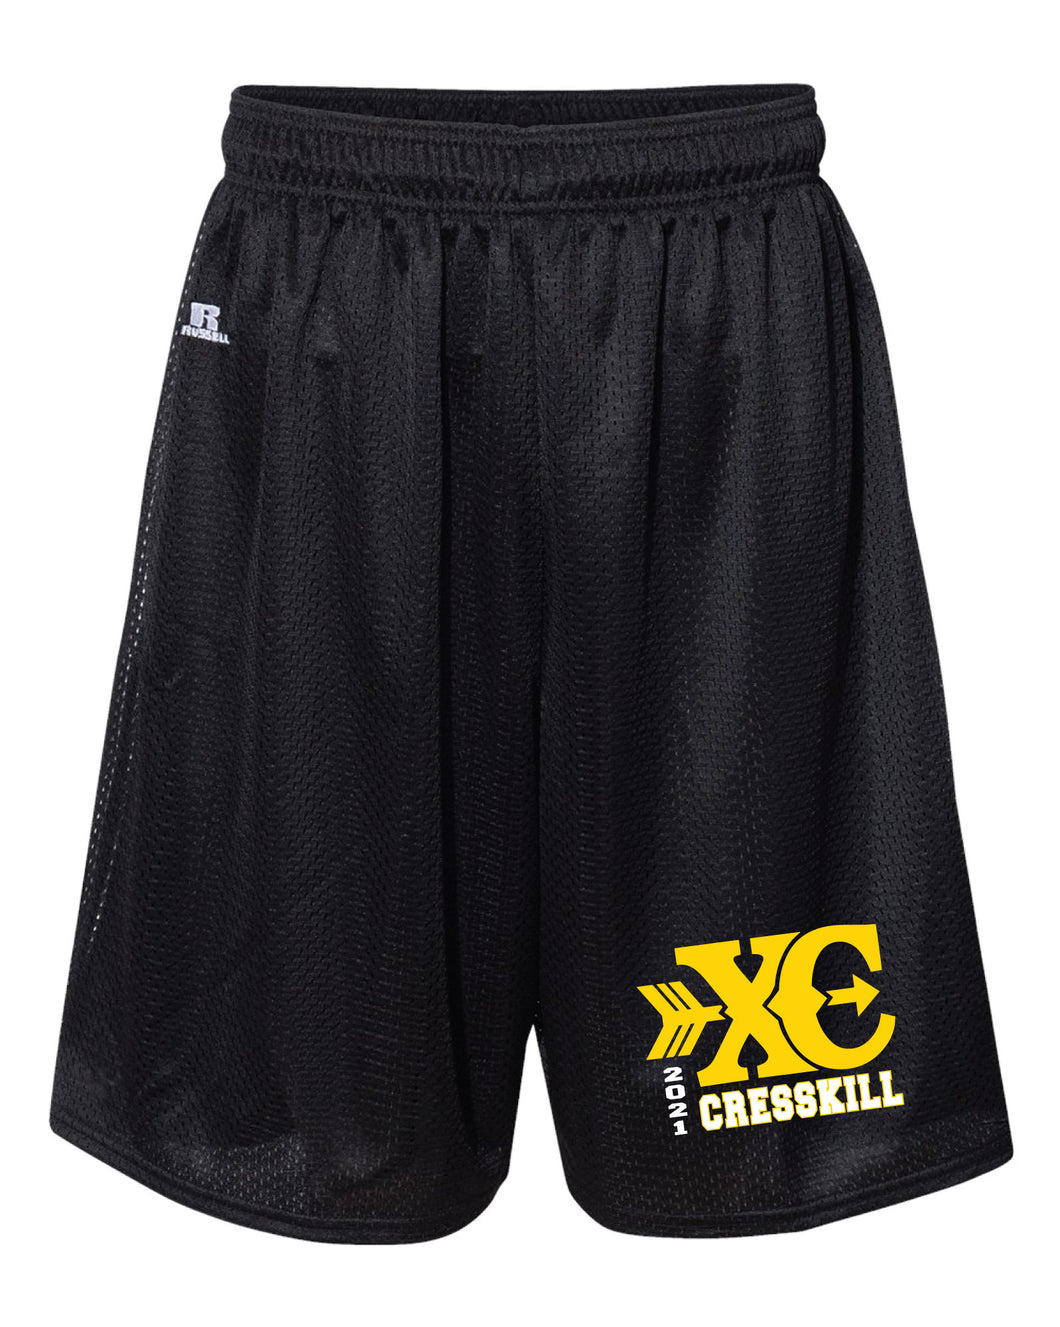 Cresskill XC Russell Athletic Tech Shorts - Black - 5KounT